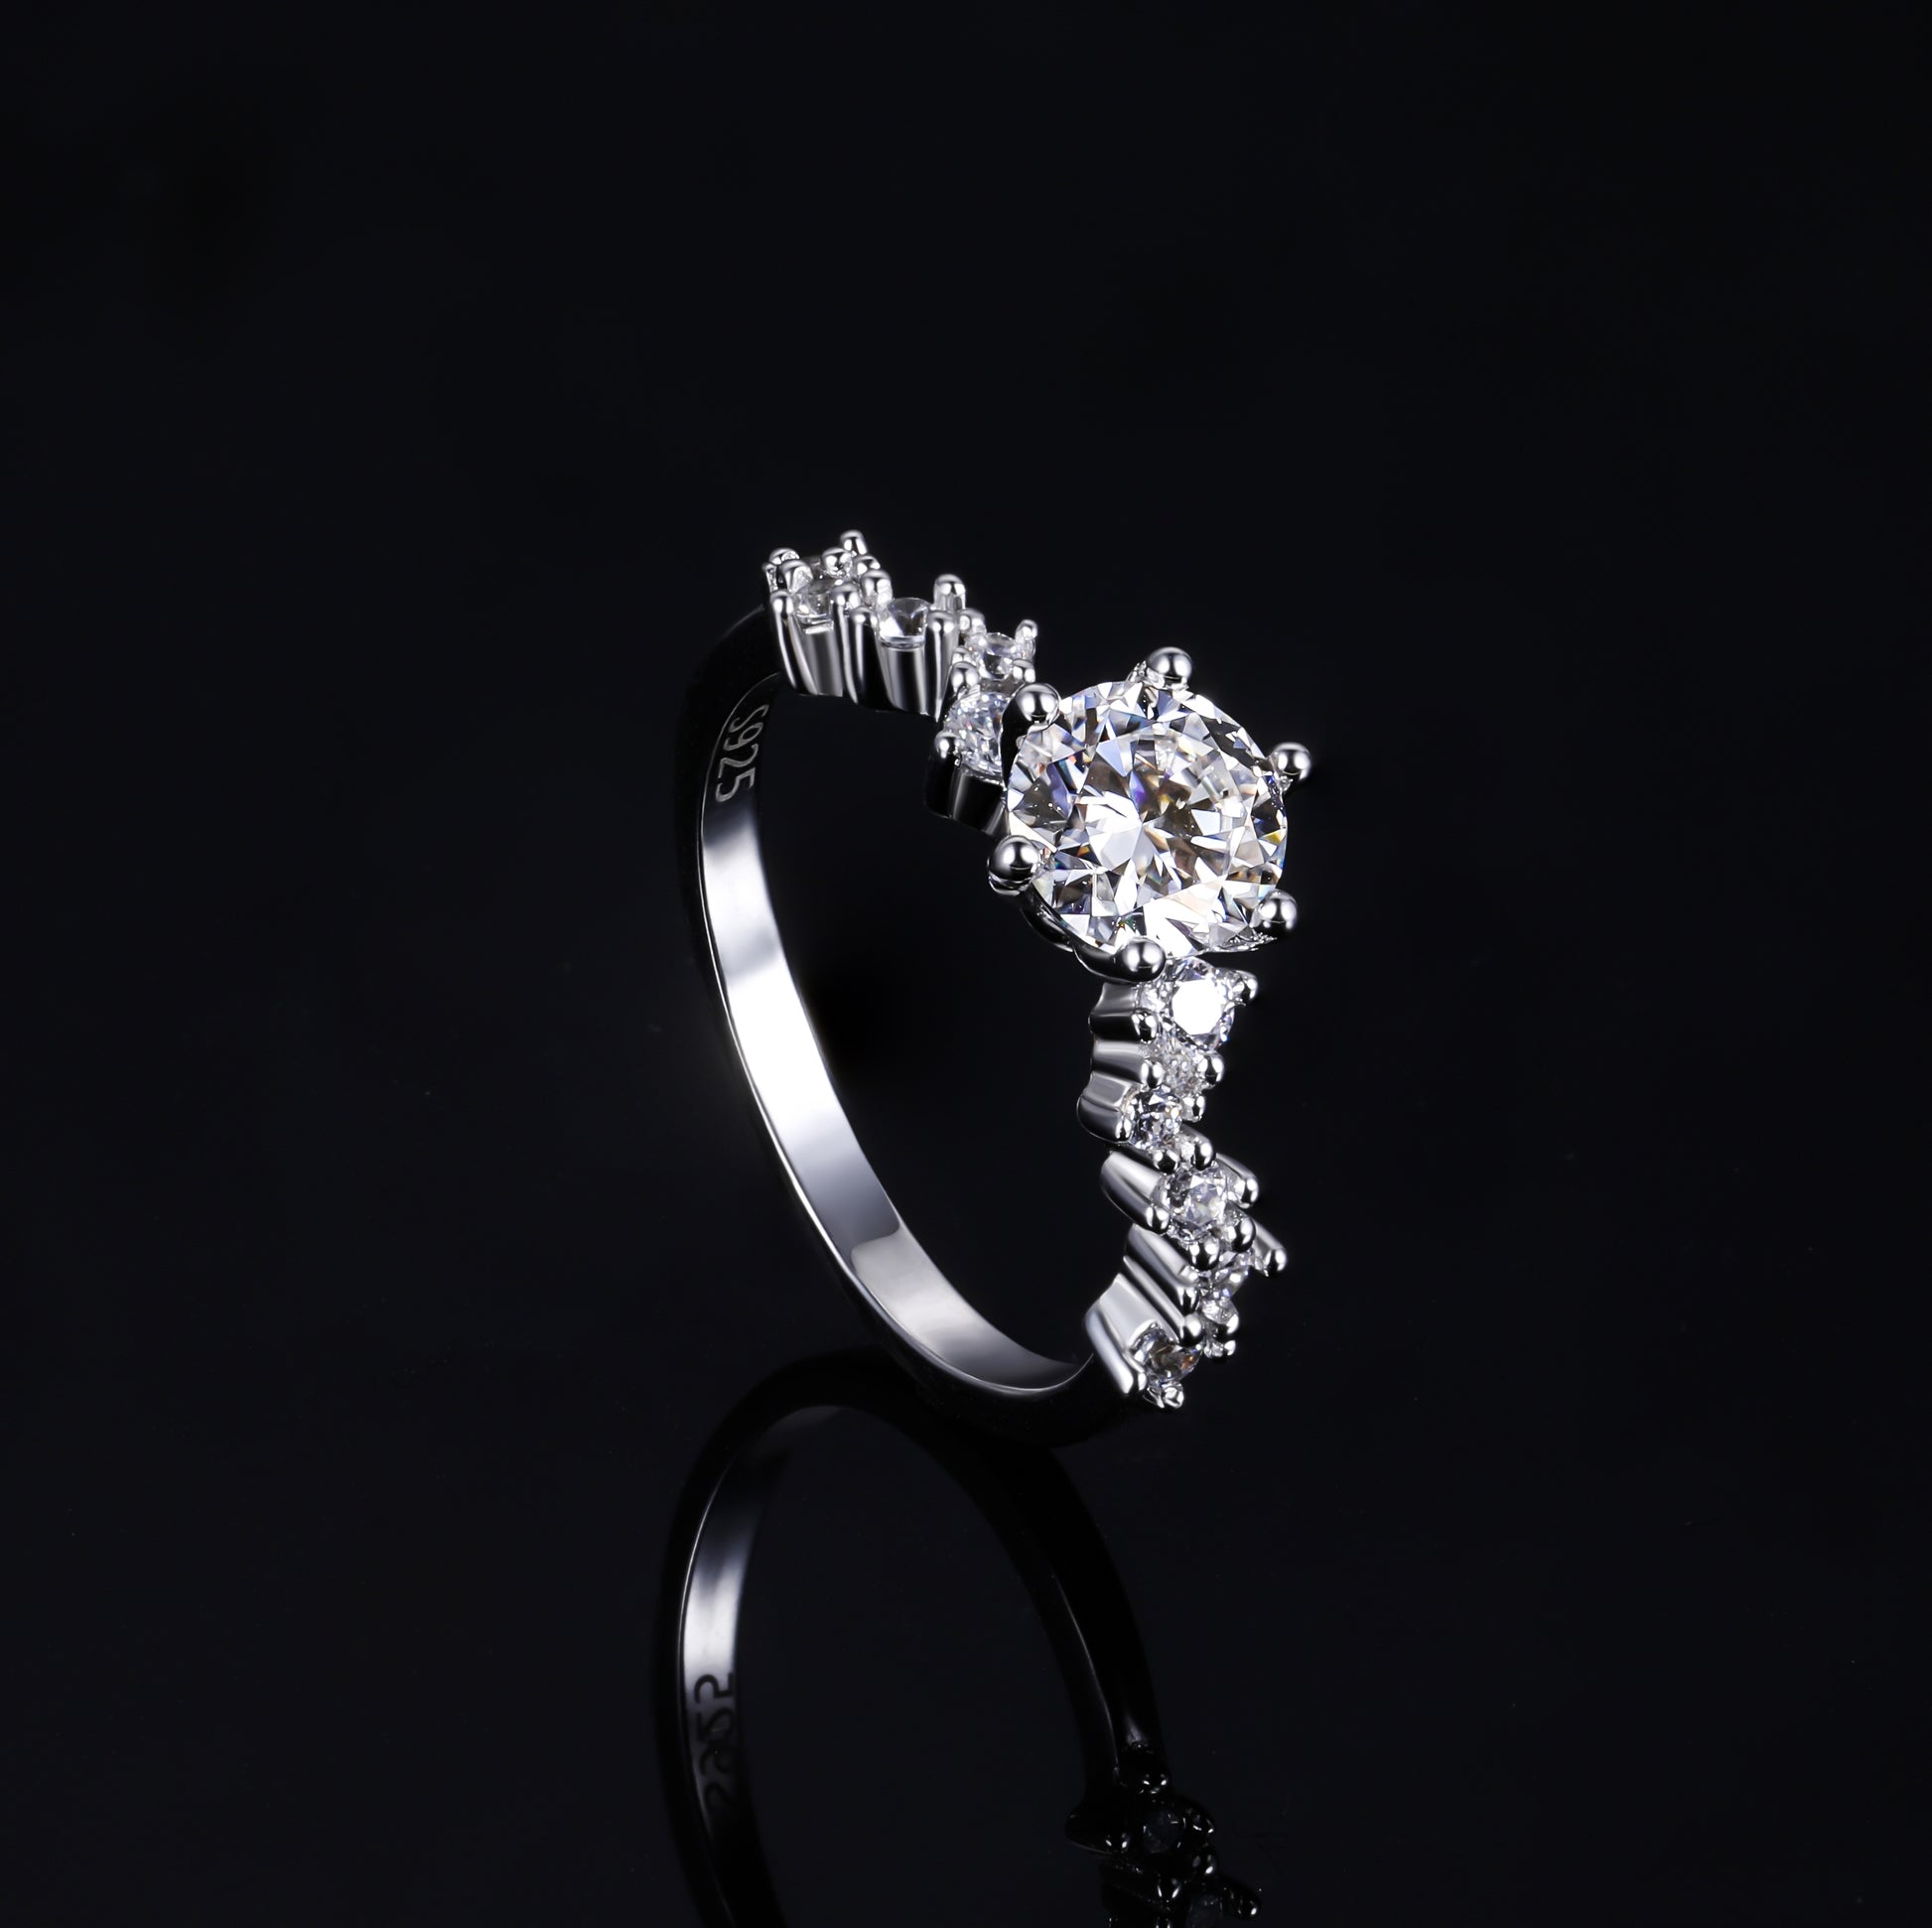 moissanite ring, s925 silver rings, affordable luxury rings, s915 rings for women